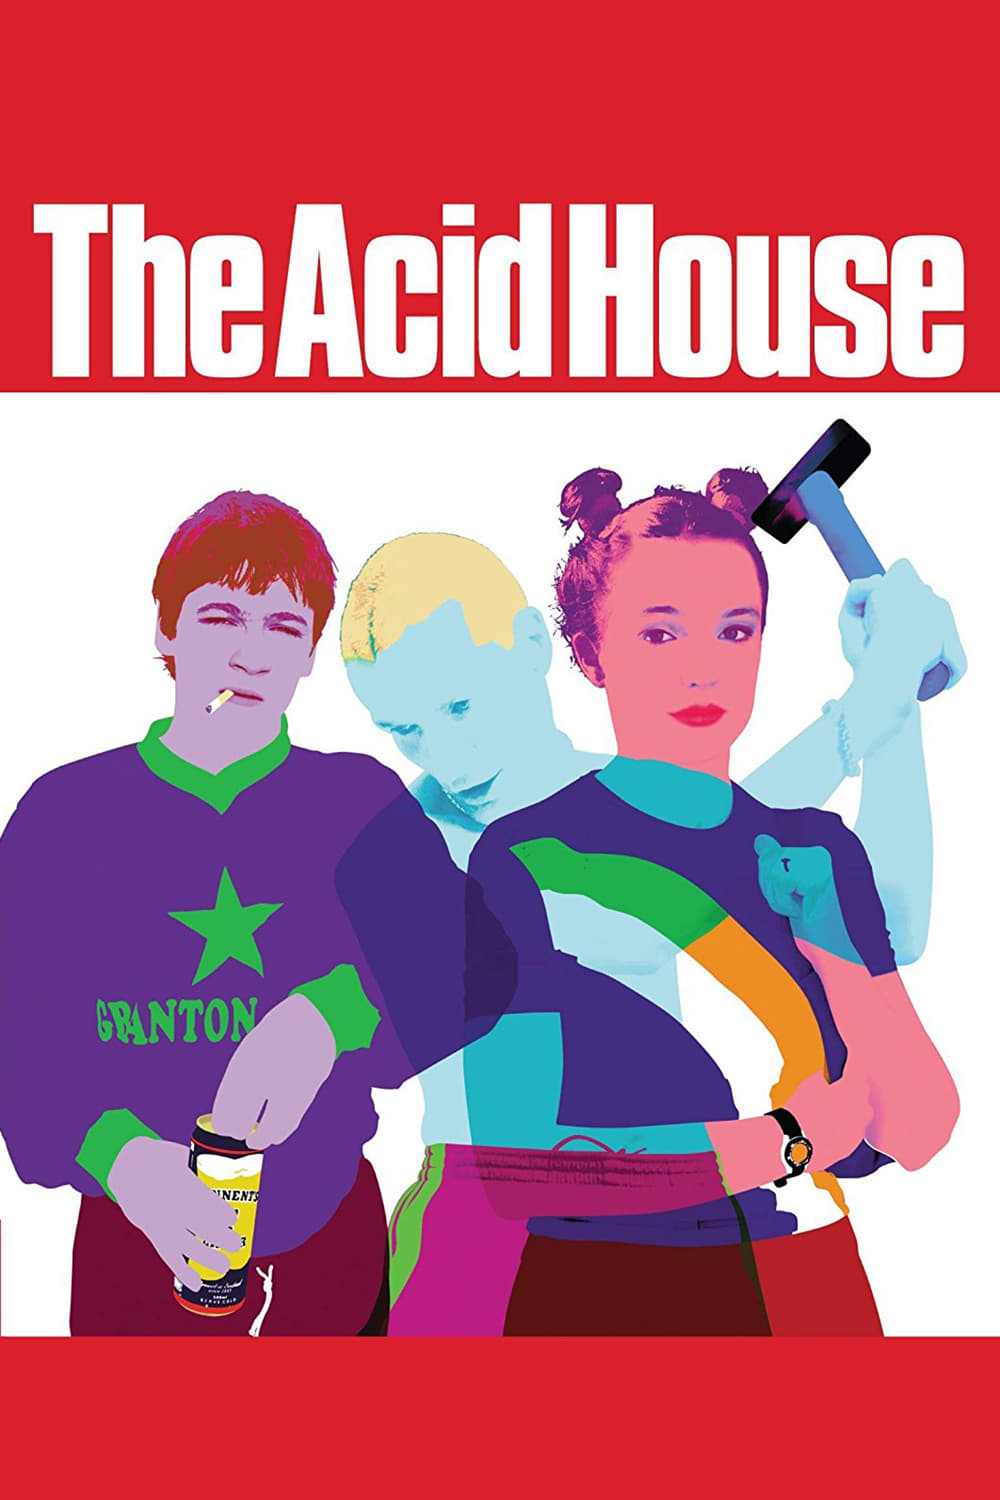 Plakat von "The Acid House"